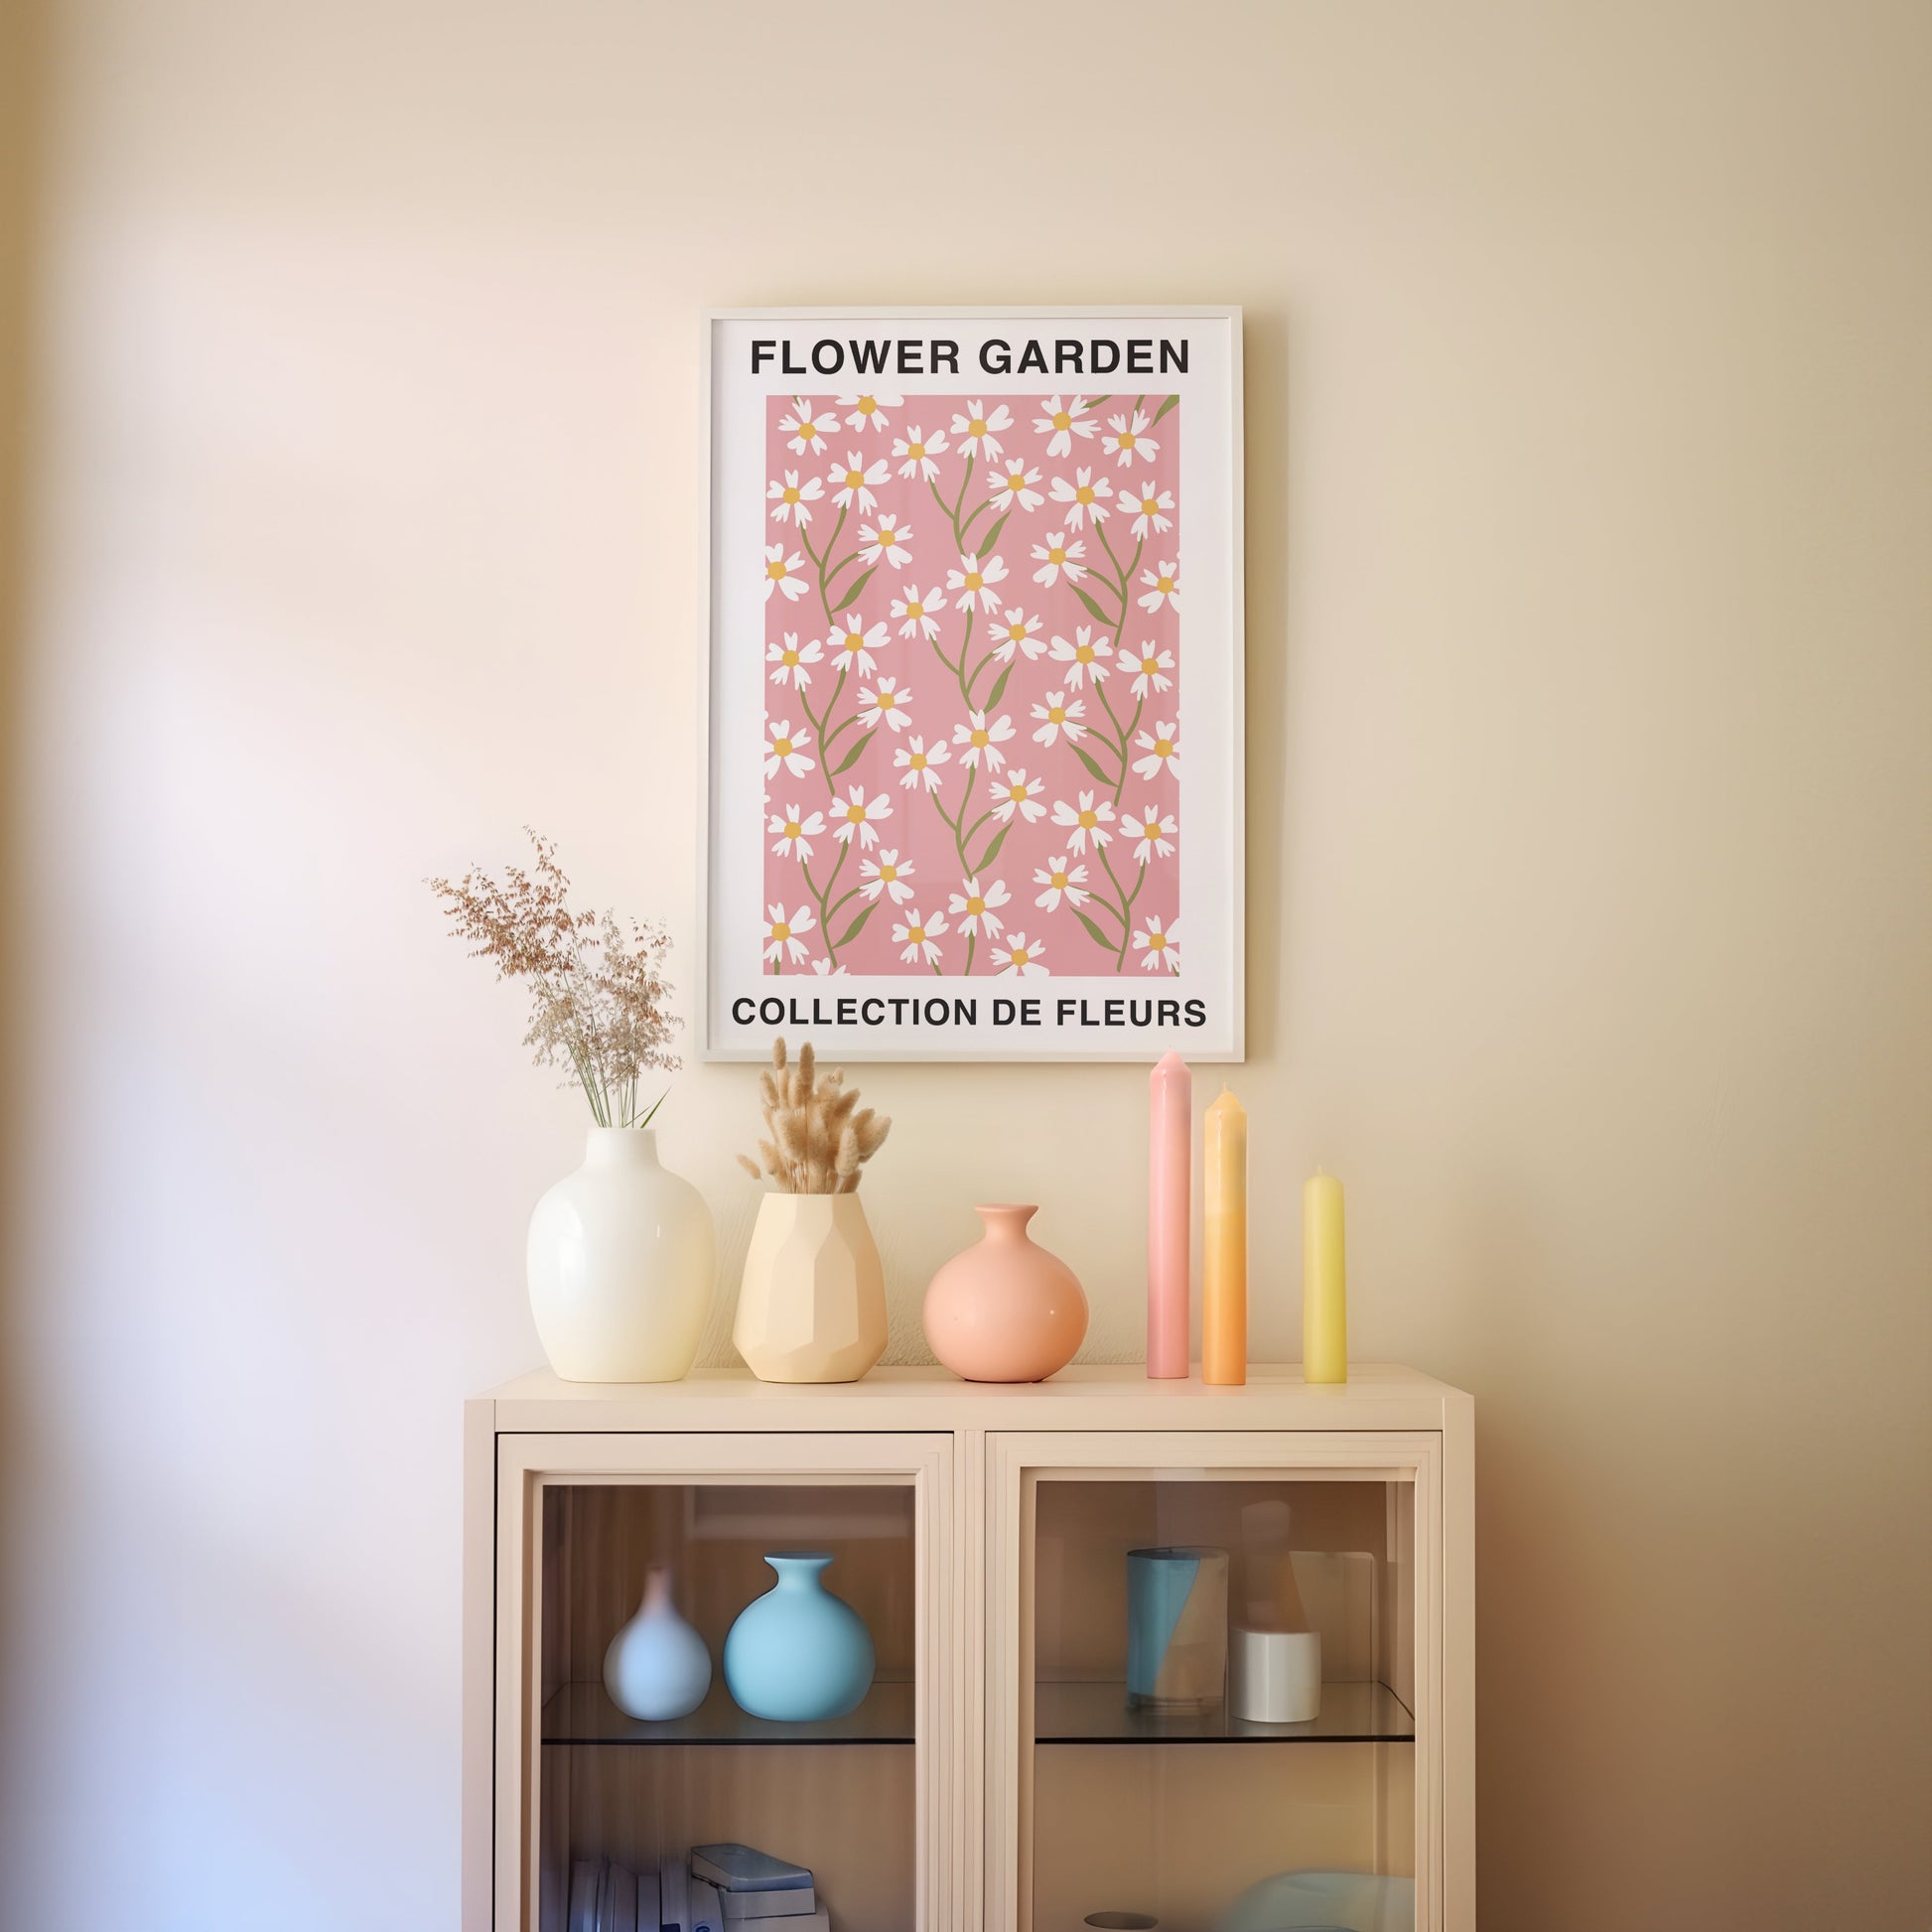 a picture of a flower garden on a shelf